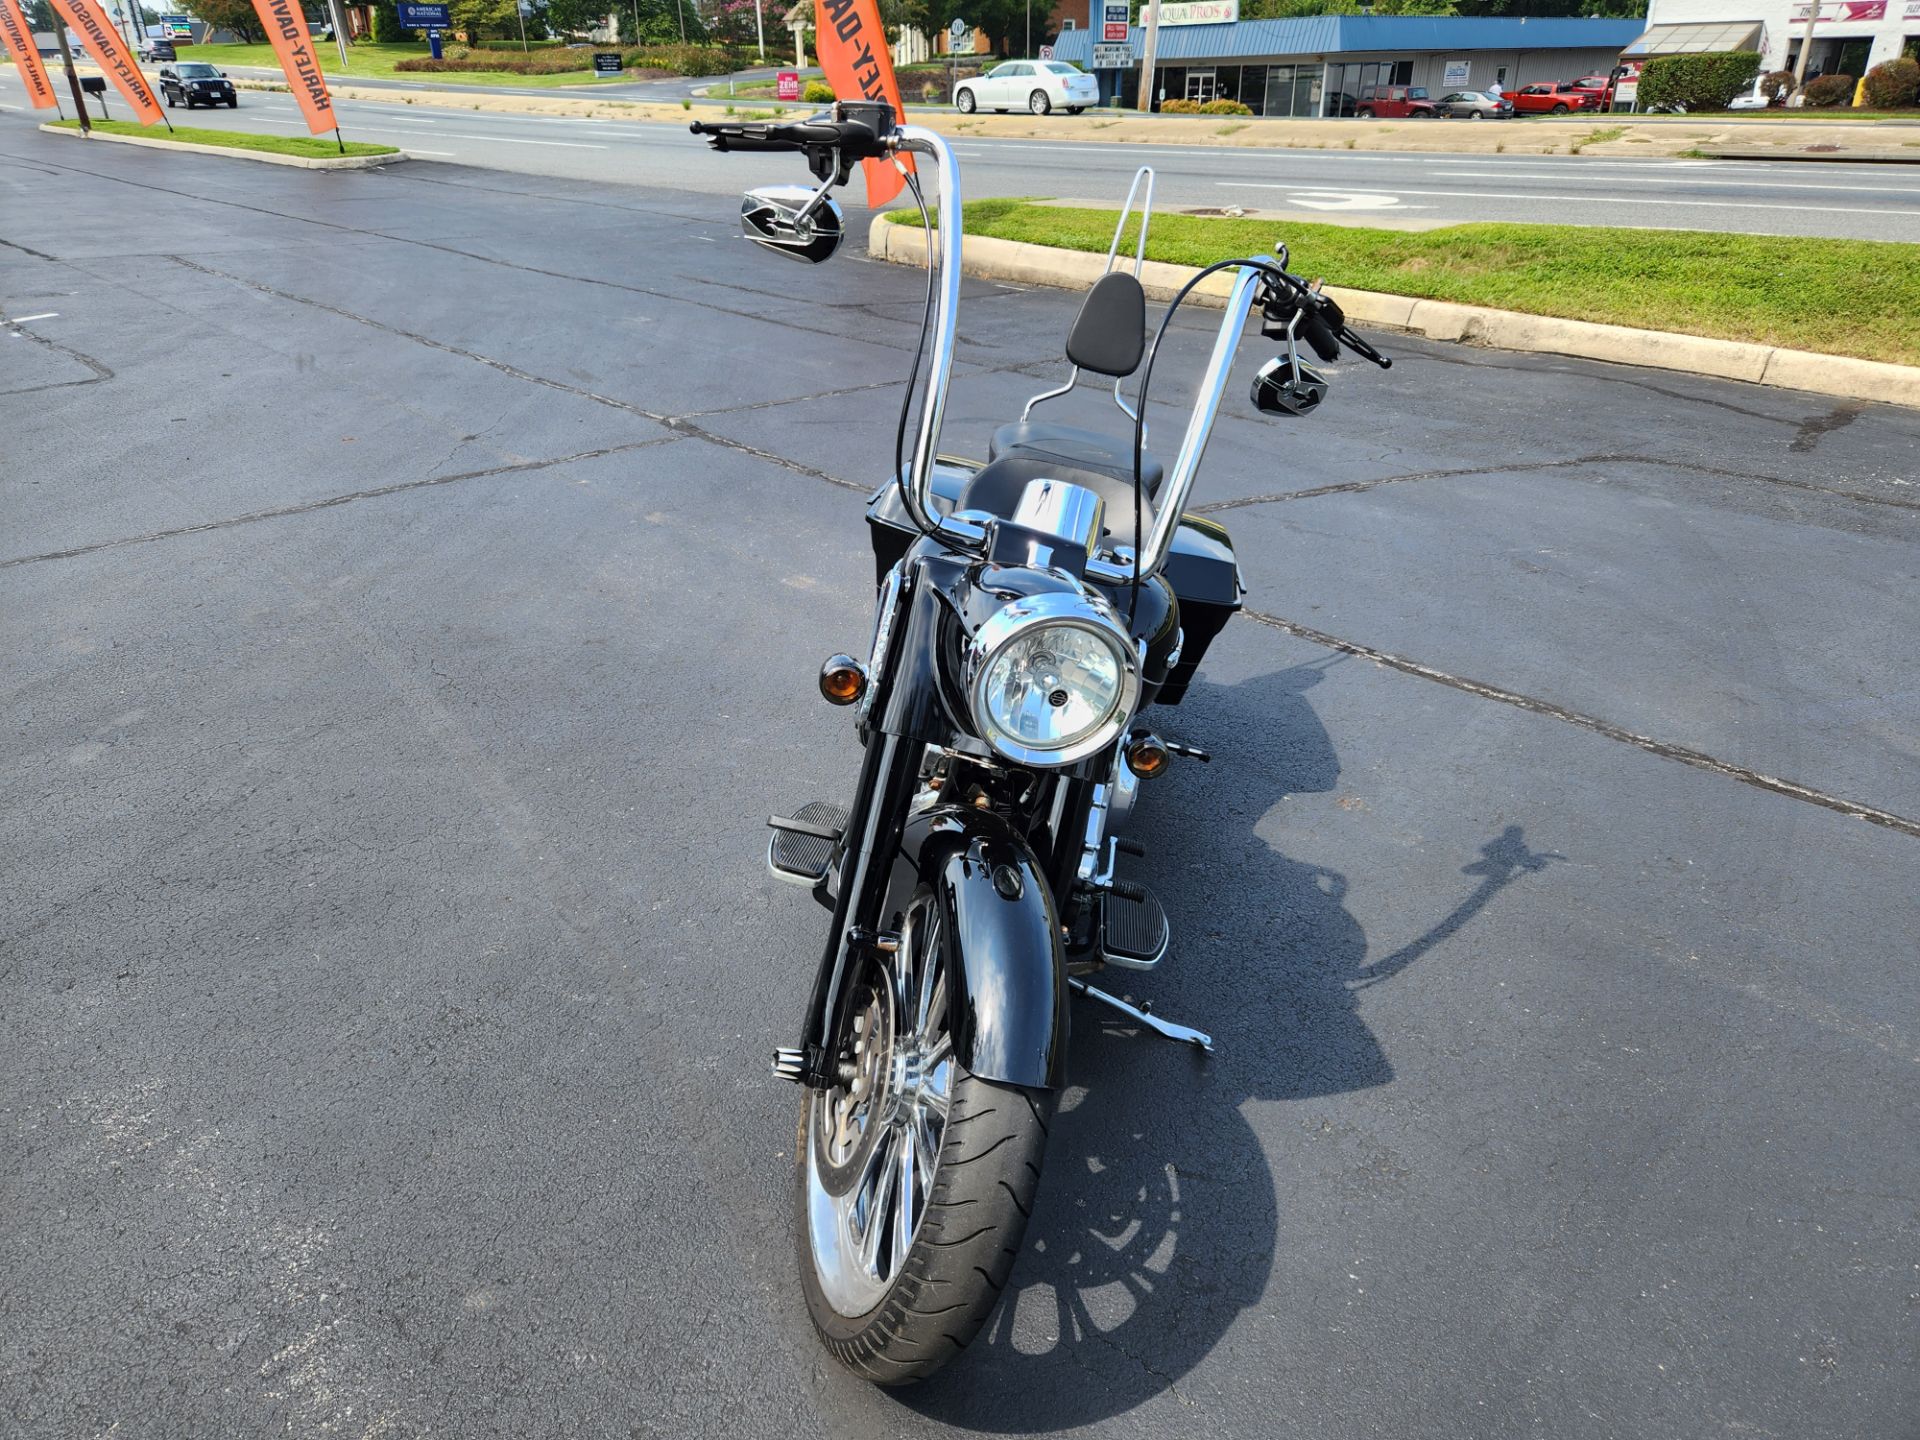 2013 Harley-Davidson Road King® in Lynchburg, Virginia - Photo 3